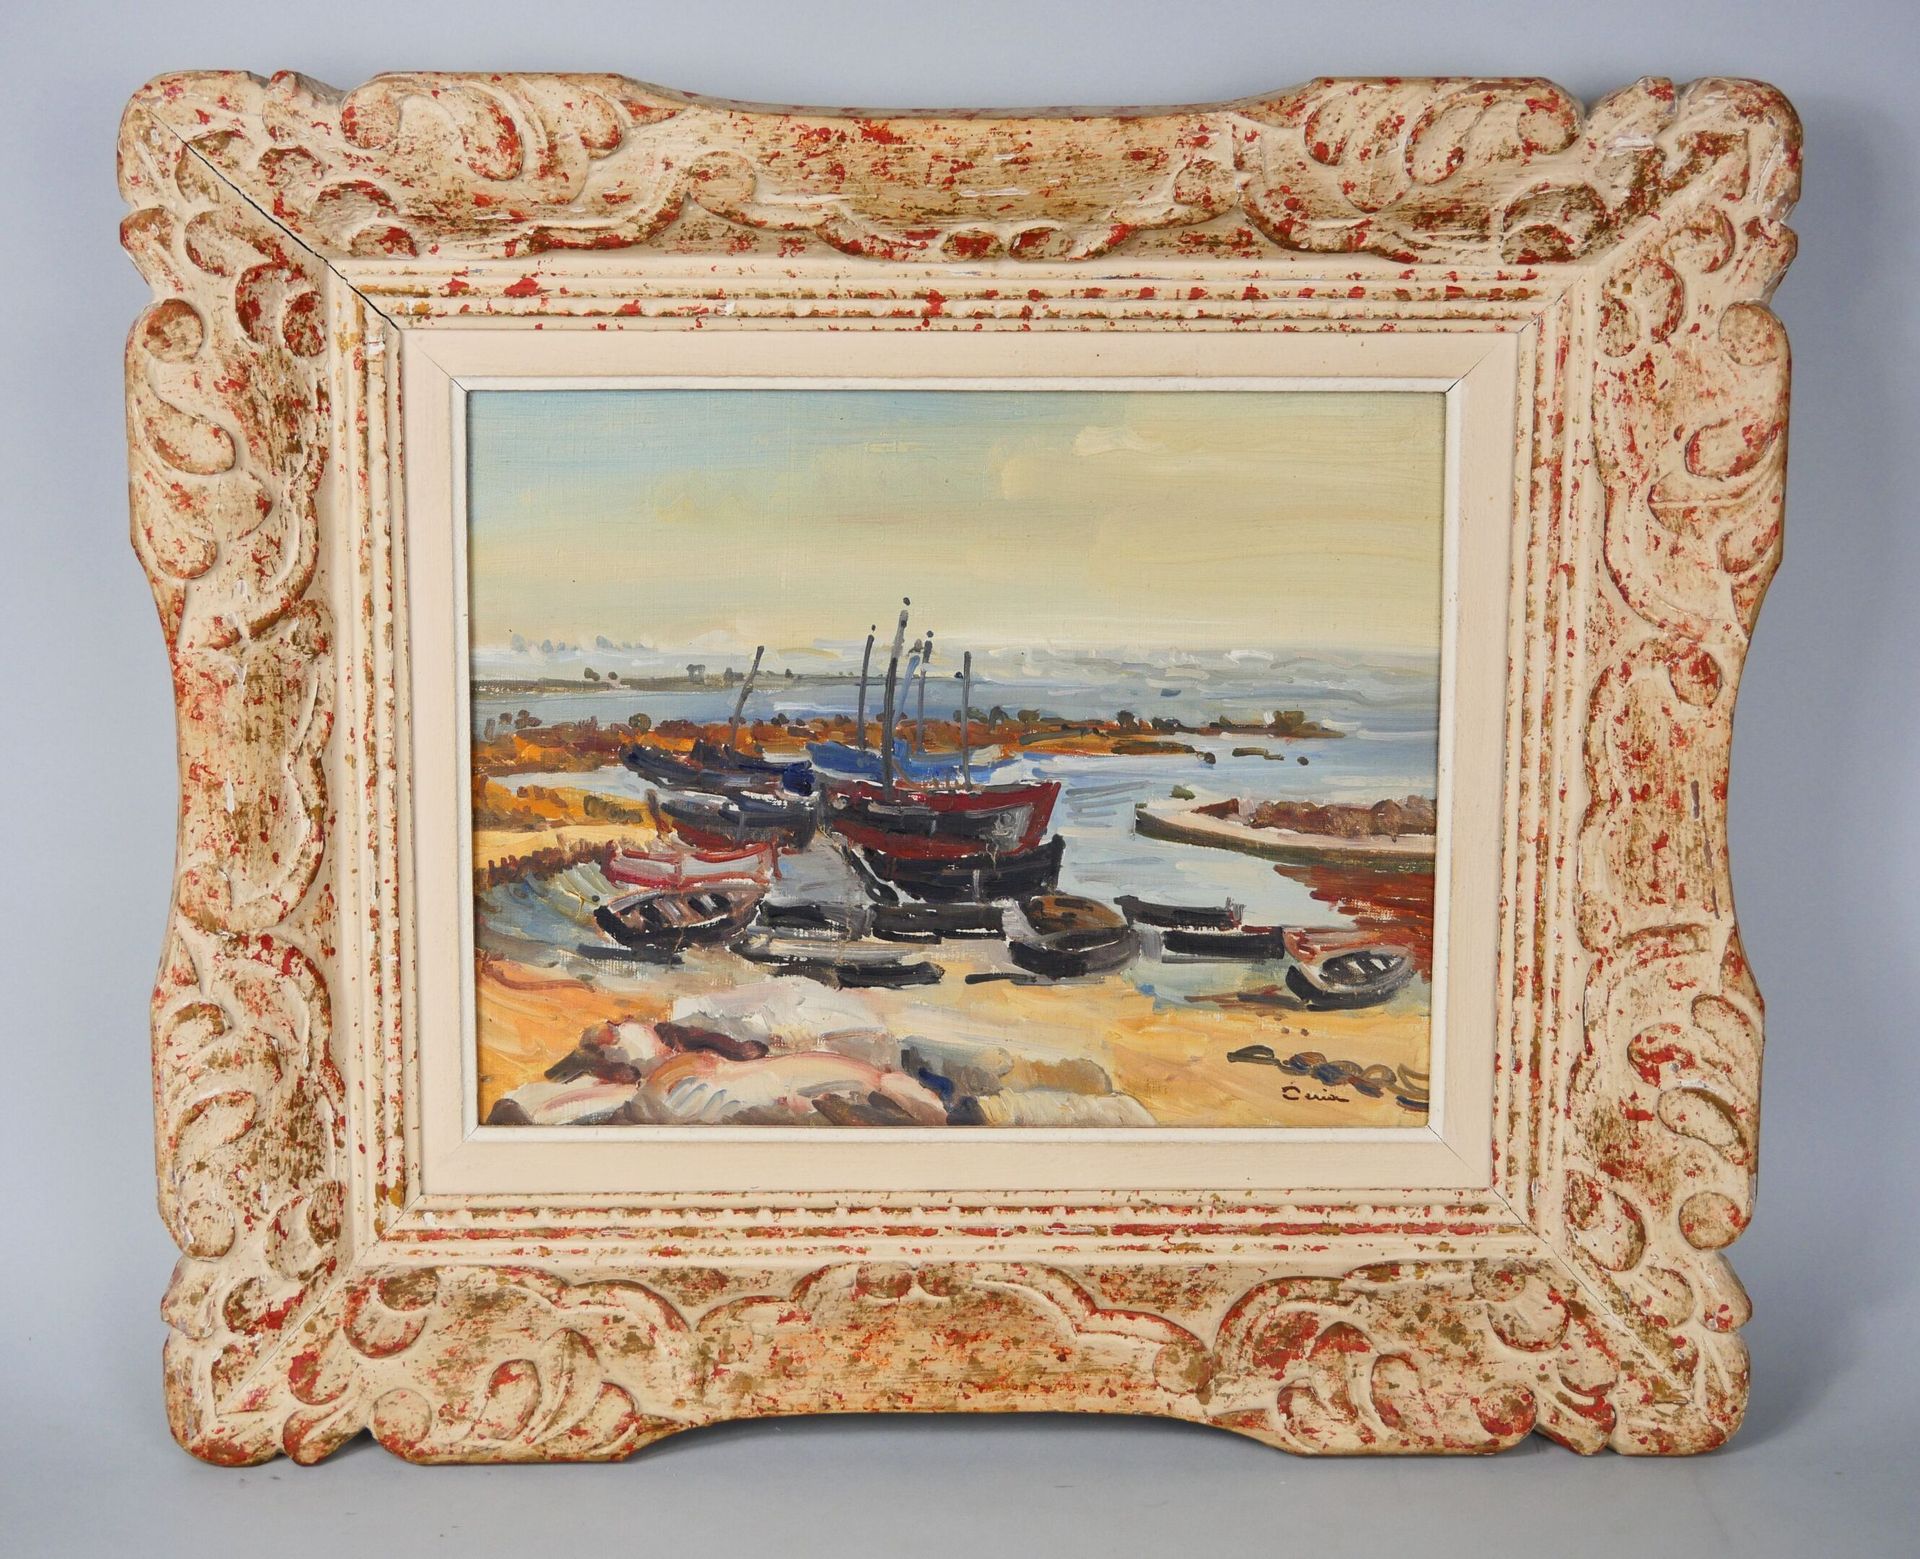 Null 埃德蒙-克雷亚 (1884-1955)
岸上的船只 
右下角有签名的布面油画
尺寸：34 x 40 cm 
带画框尺寸：48 x 55 cm

拍卖会&hellip;